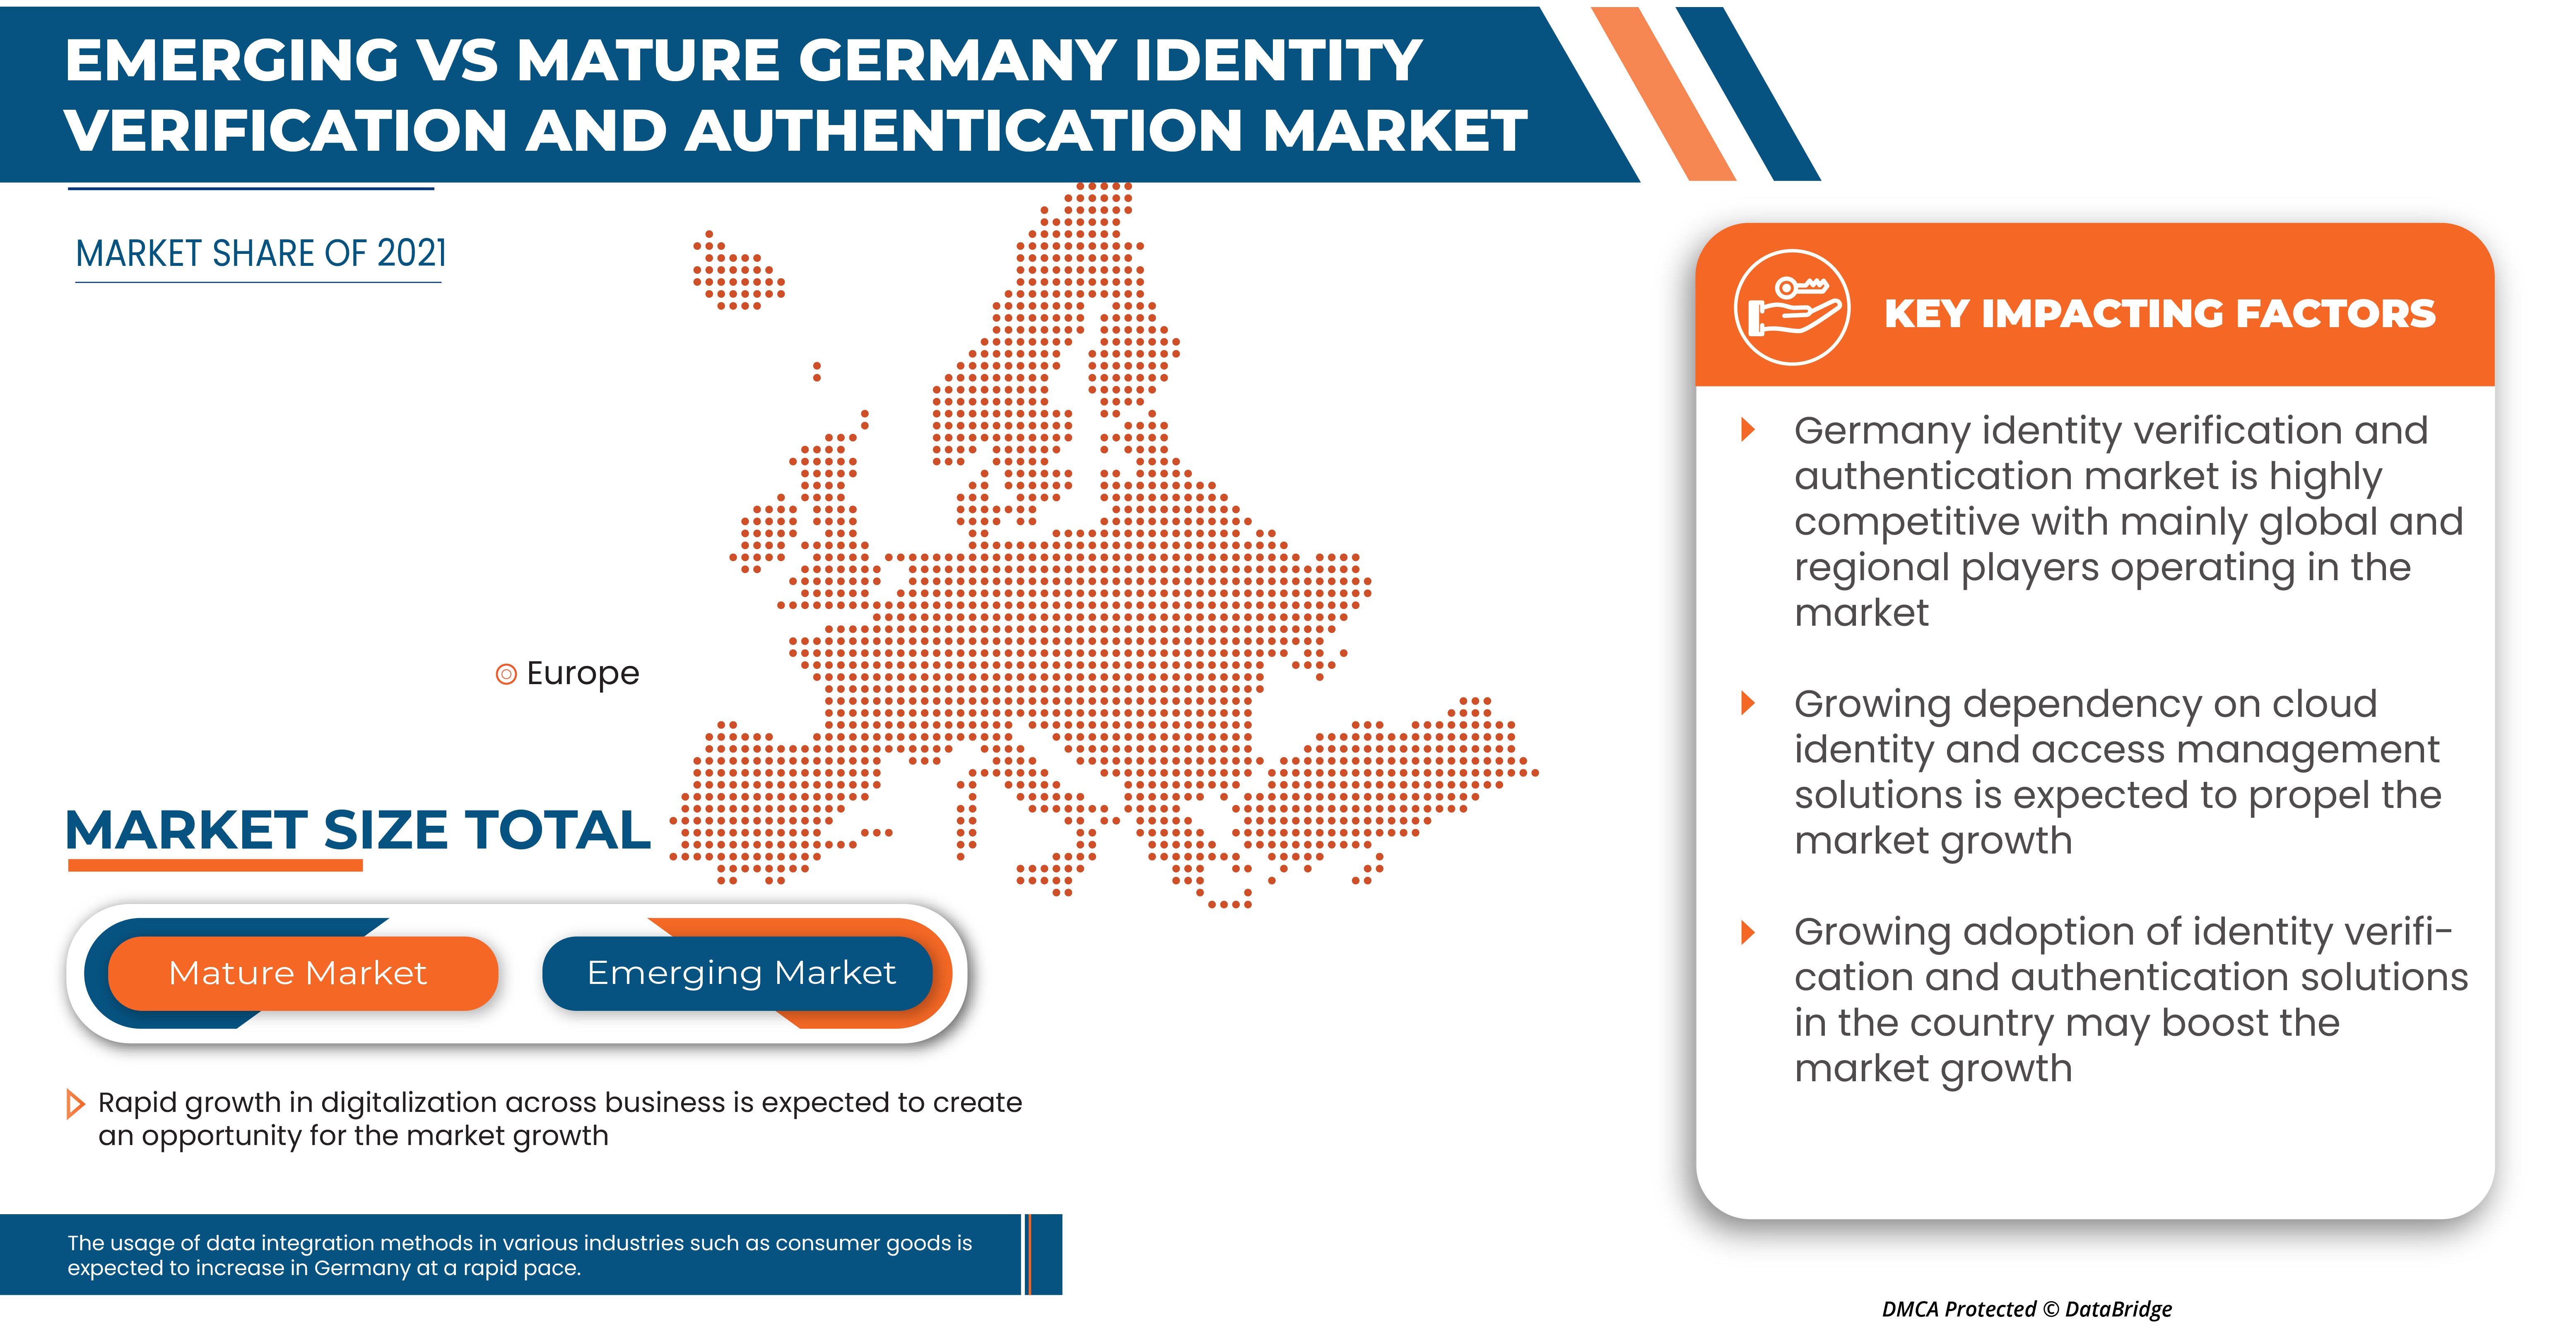 Germany Identity Verification and Authentication Market